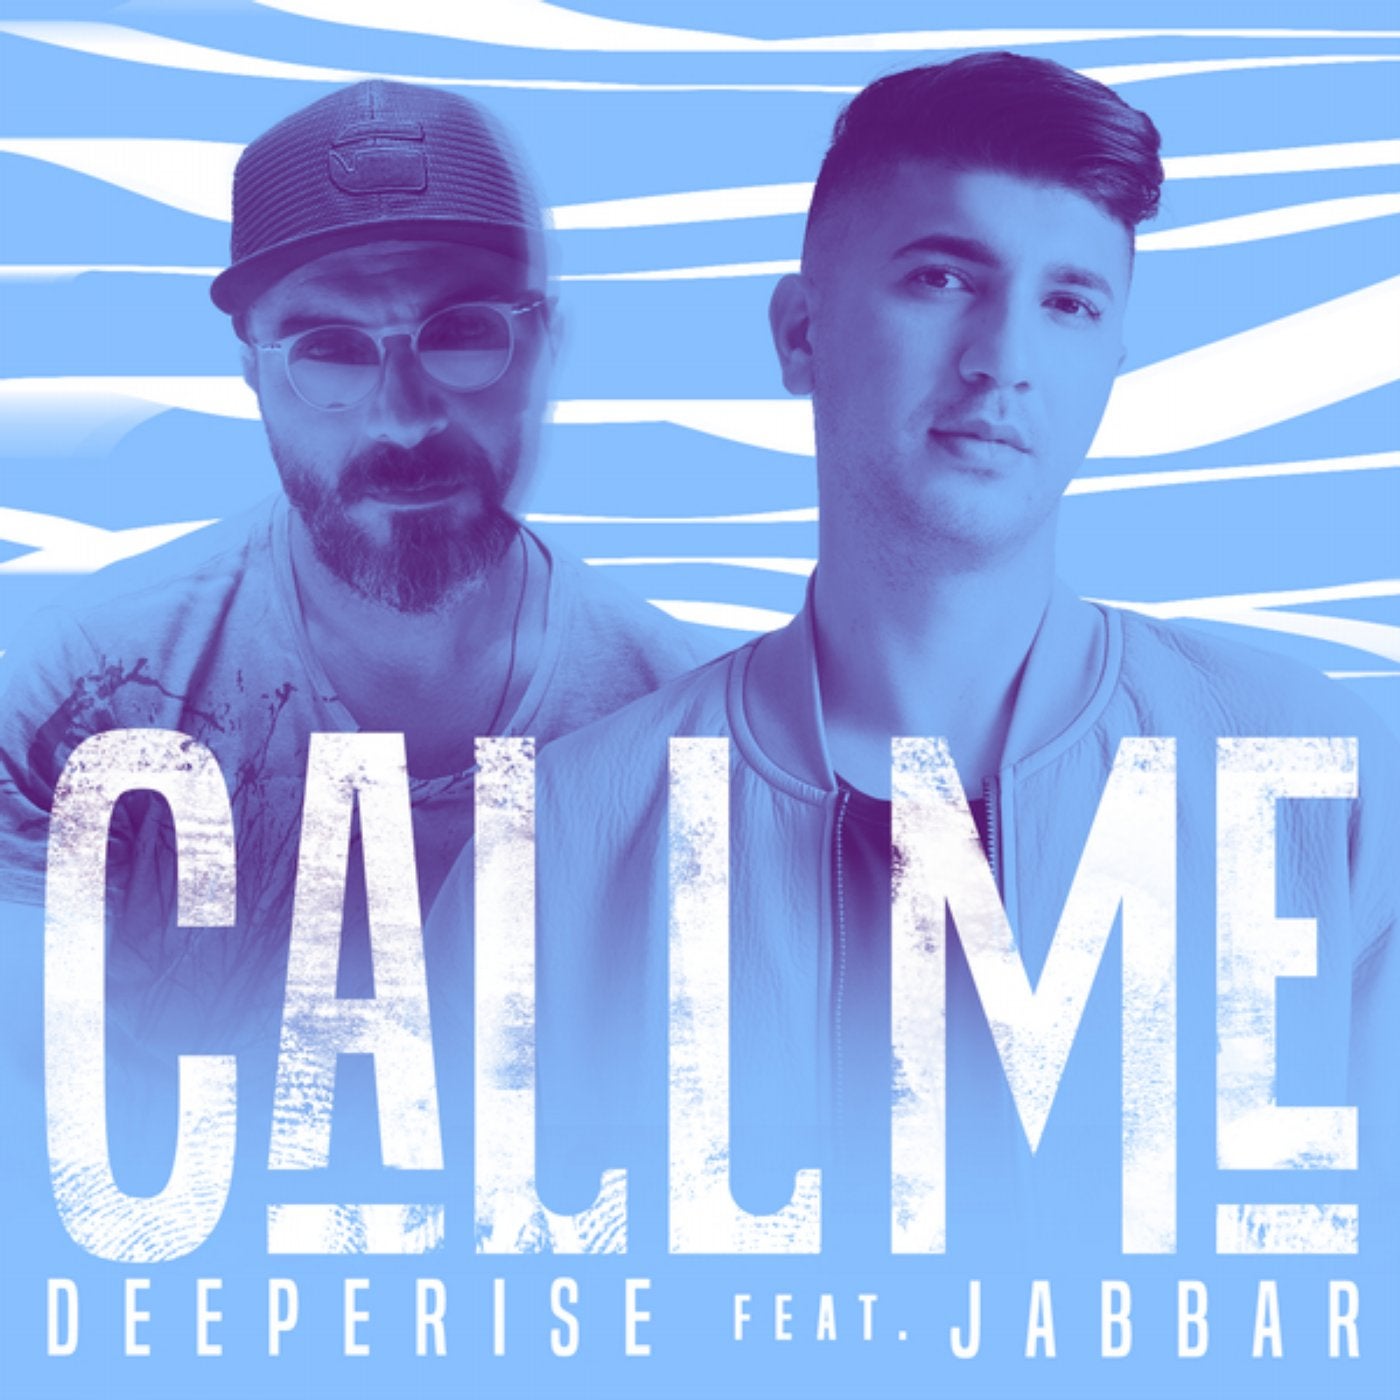 Feel rise. Deeperise feat. Jabbar. Deeperise feat. Jabbar-Unuttum Derdimi. Deeperise feat. Jabbar - one by one. Deeperise feat. Jabbar mp3.